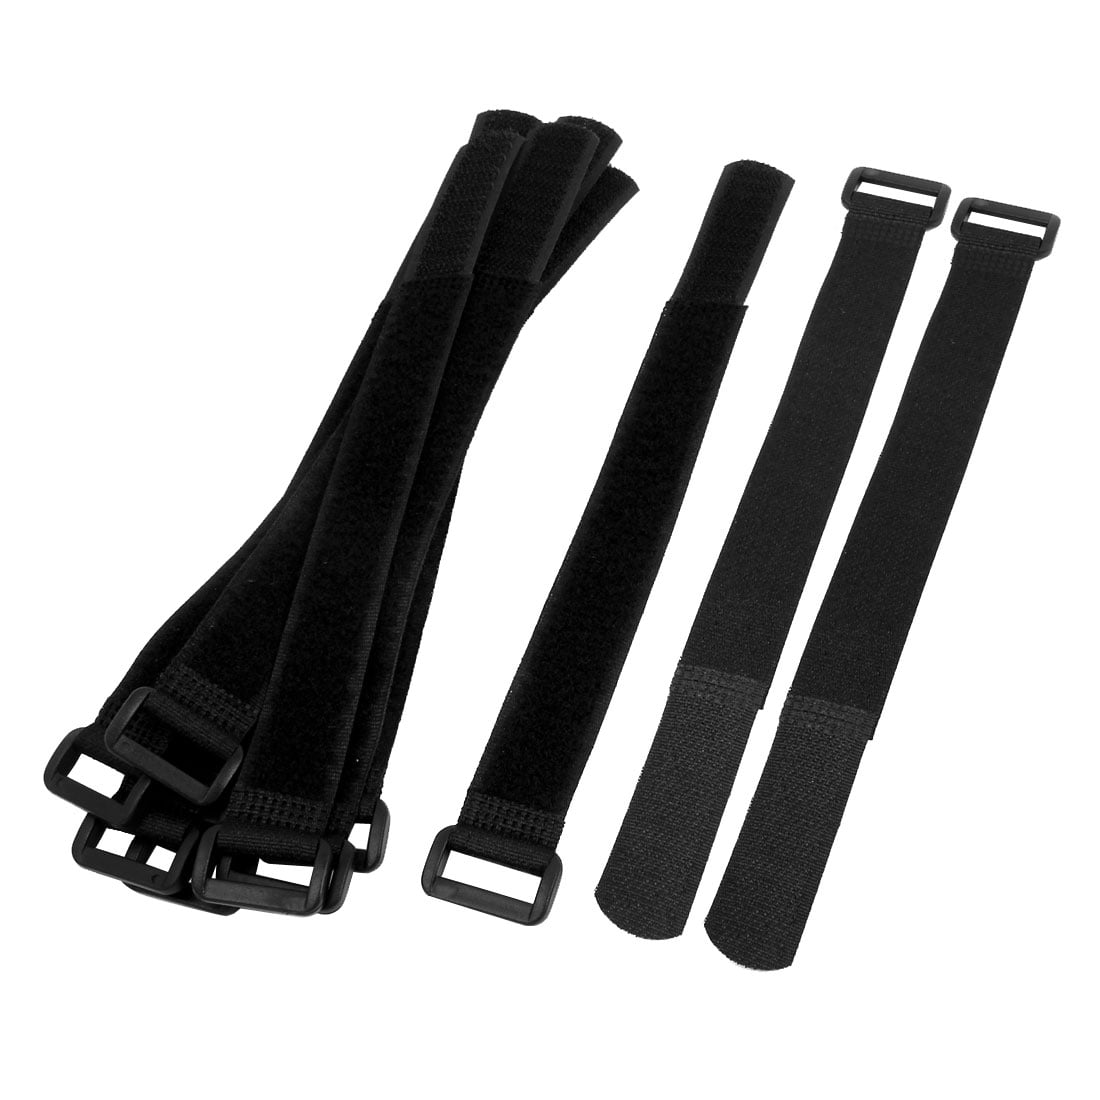 Luggage Nylon Elastic Cable Organizer Hook Loop Tie Strap Black 2.5 x 40cm 2pcs 